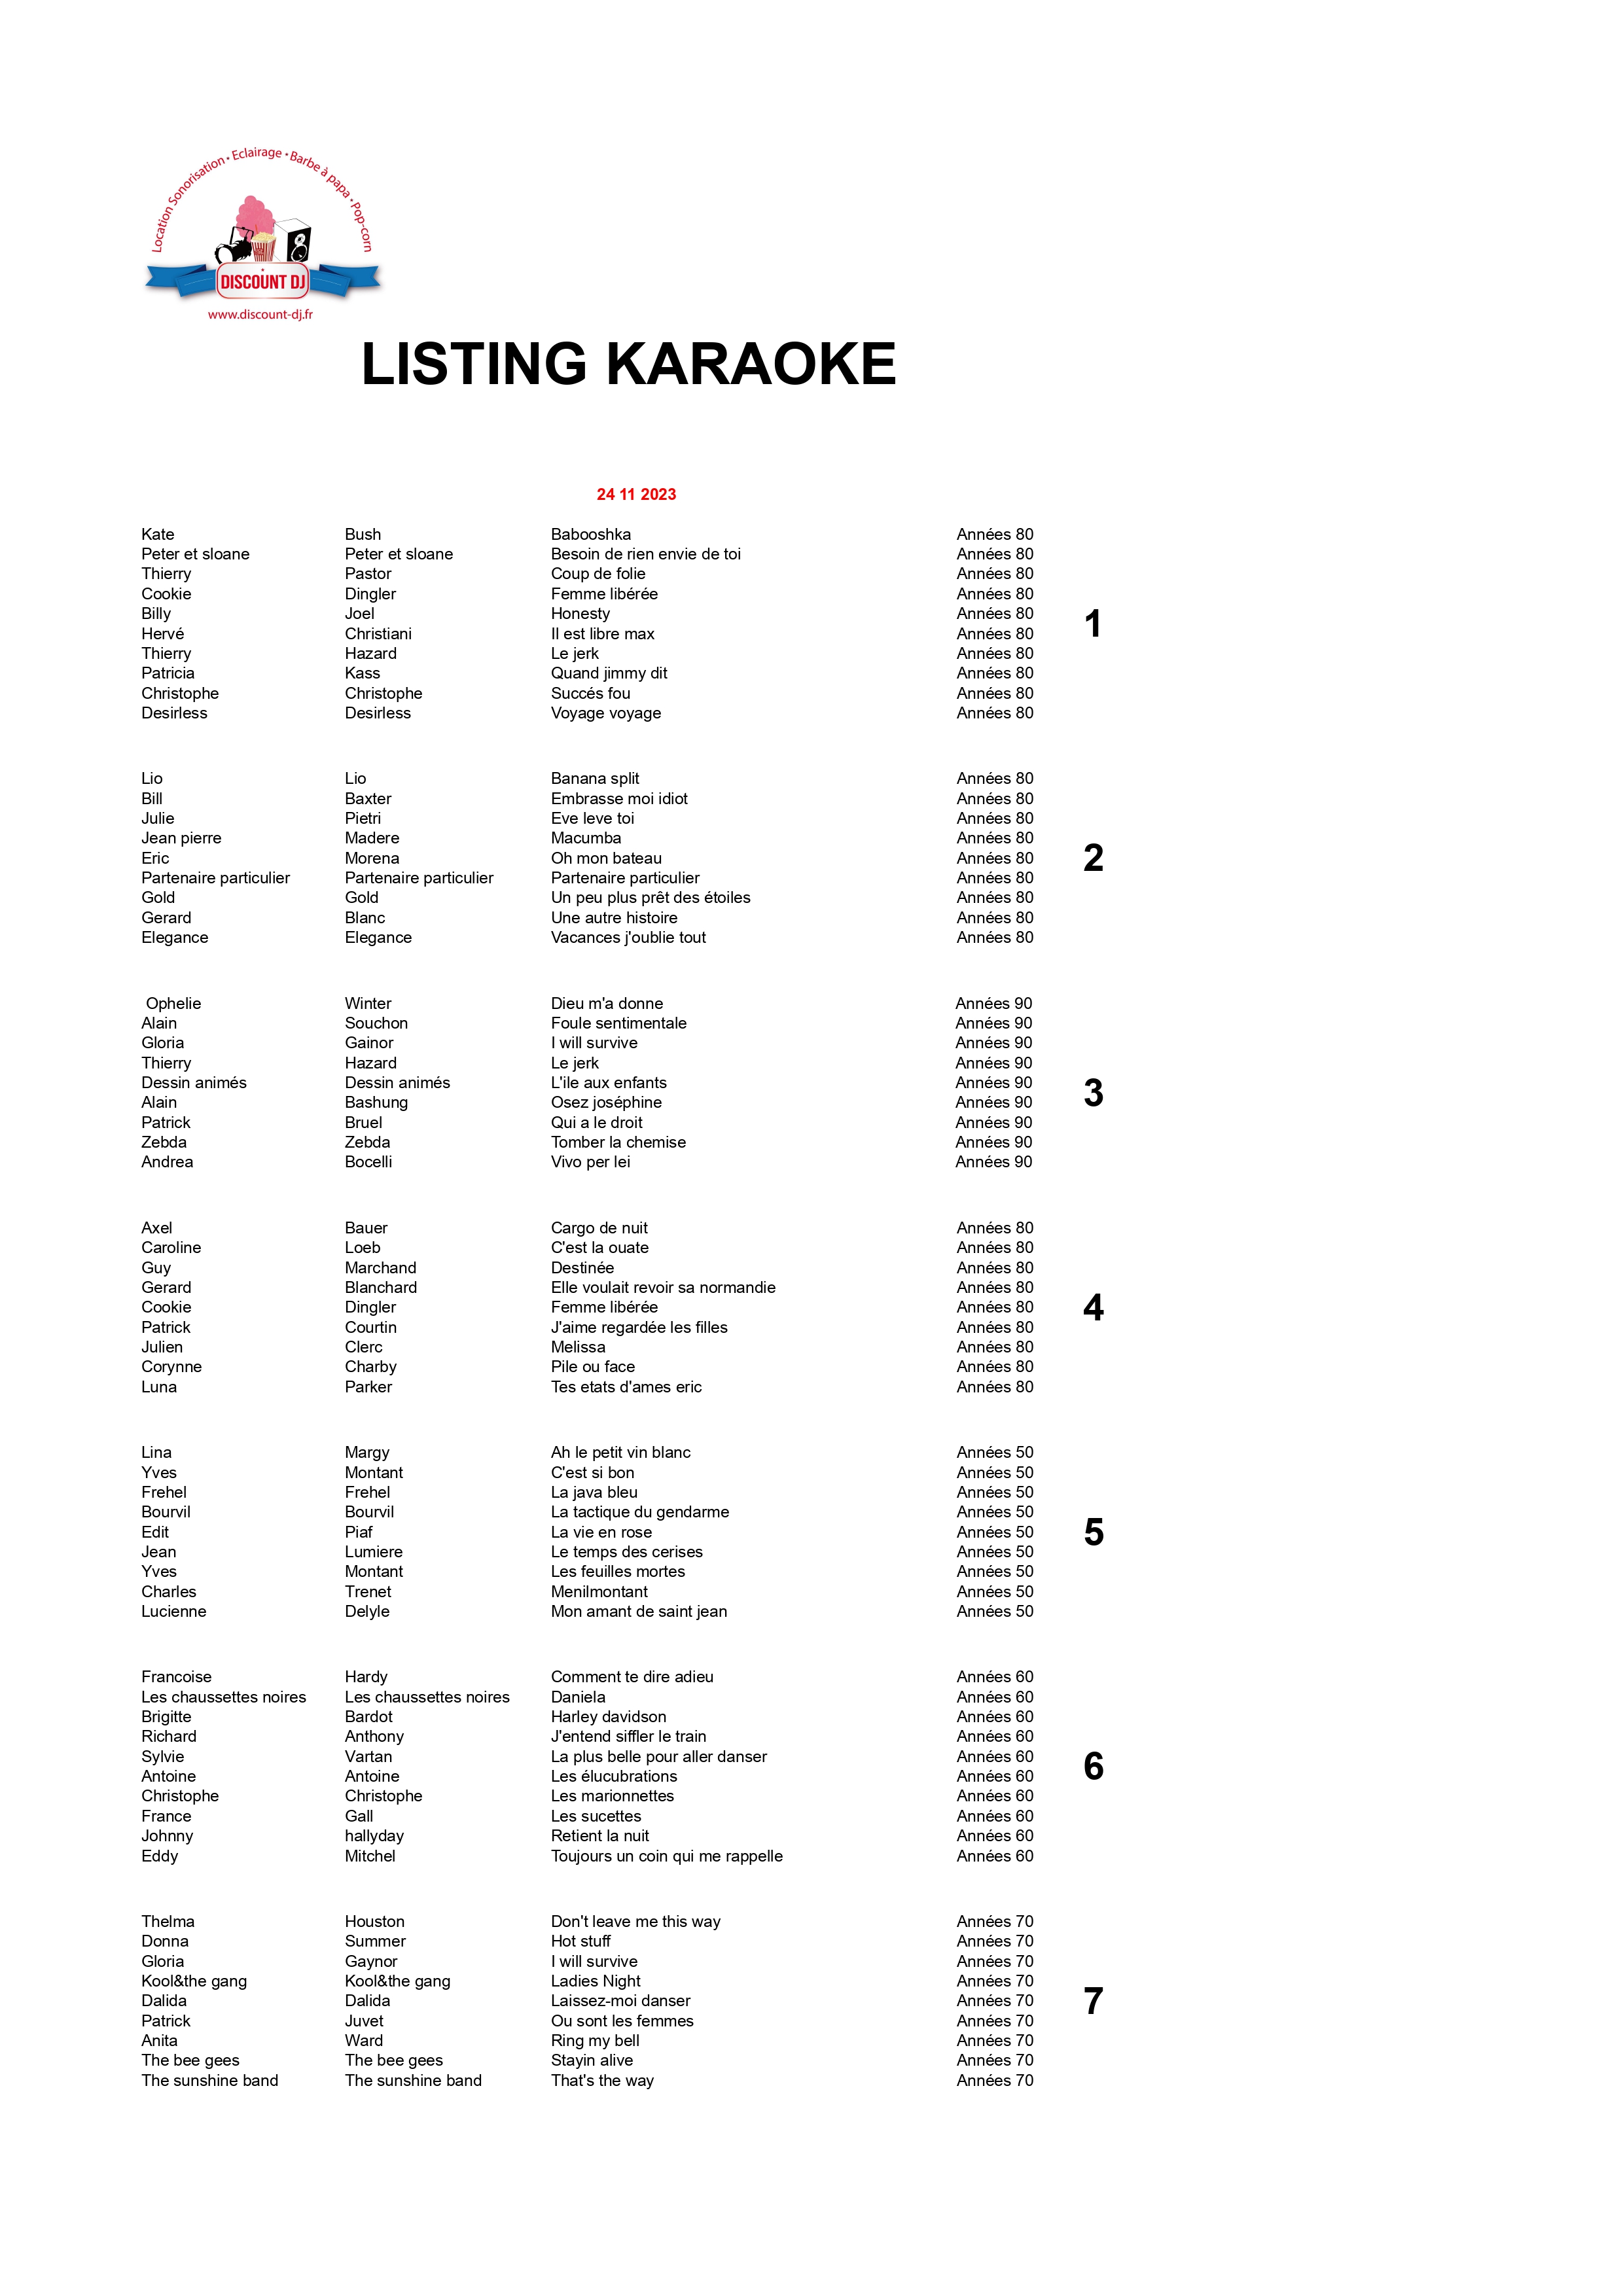 Listing karaoke disques 1 a 7